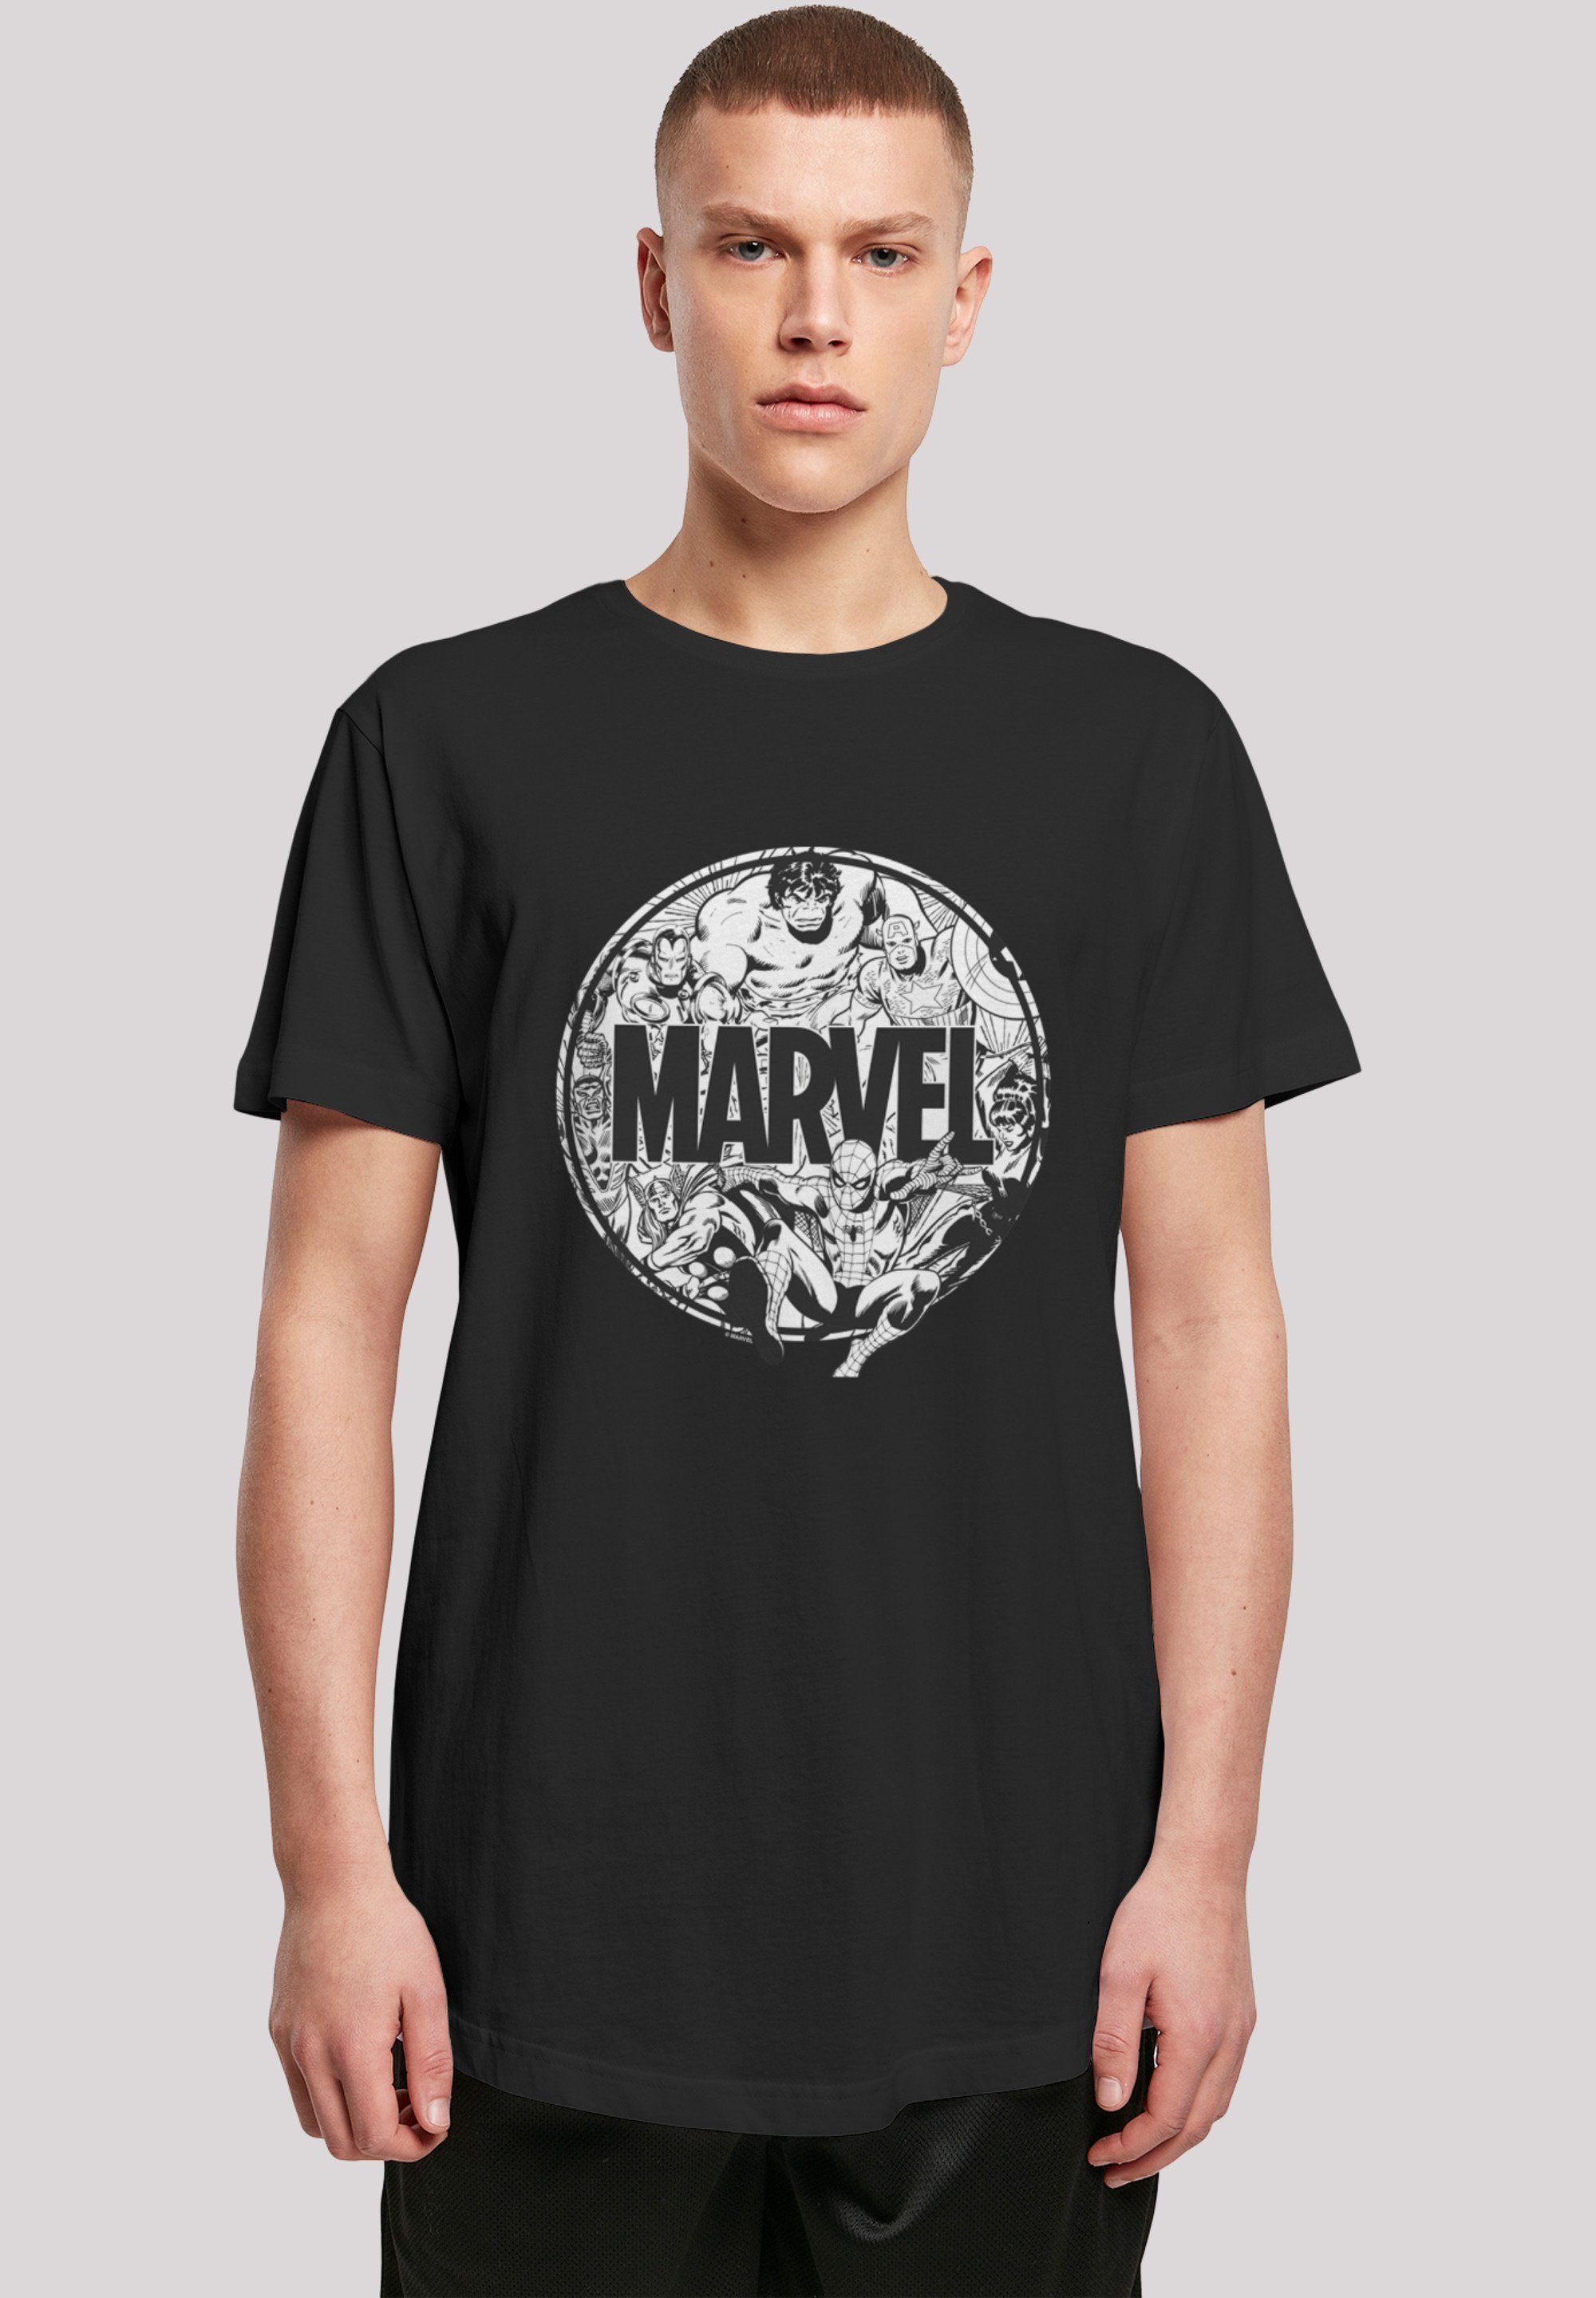 Logo Character Print, weicher Infill\' F4NT4STIC Baumwollstoff Tragekomfort Marvel hohem mit Comics Sehr T-Shirt